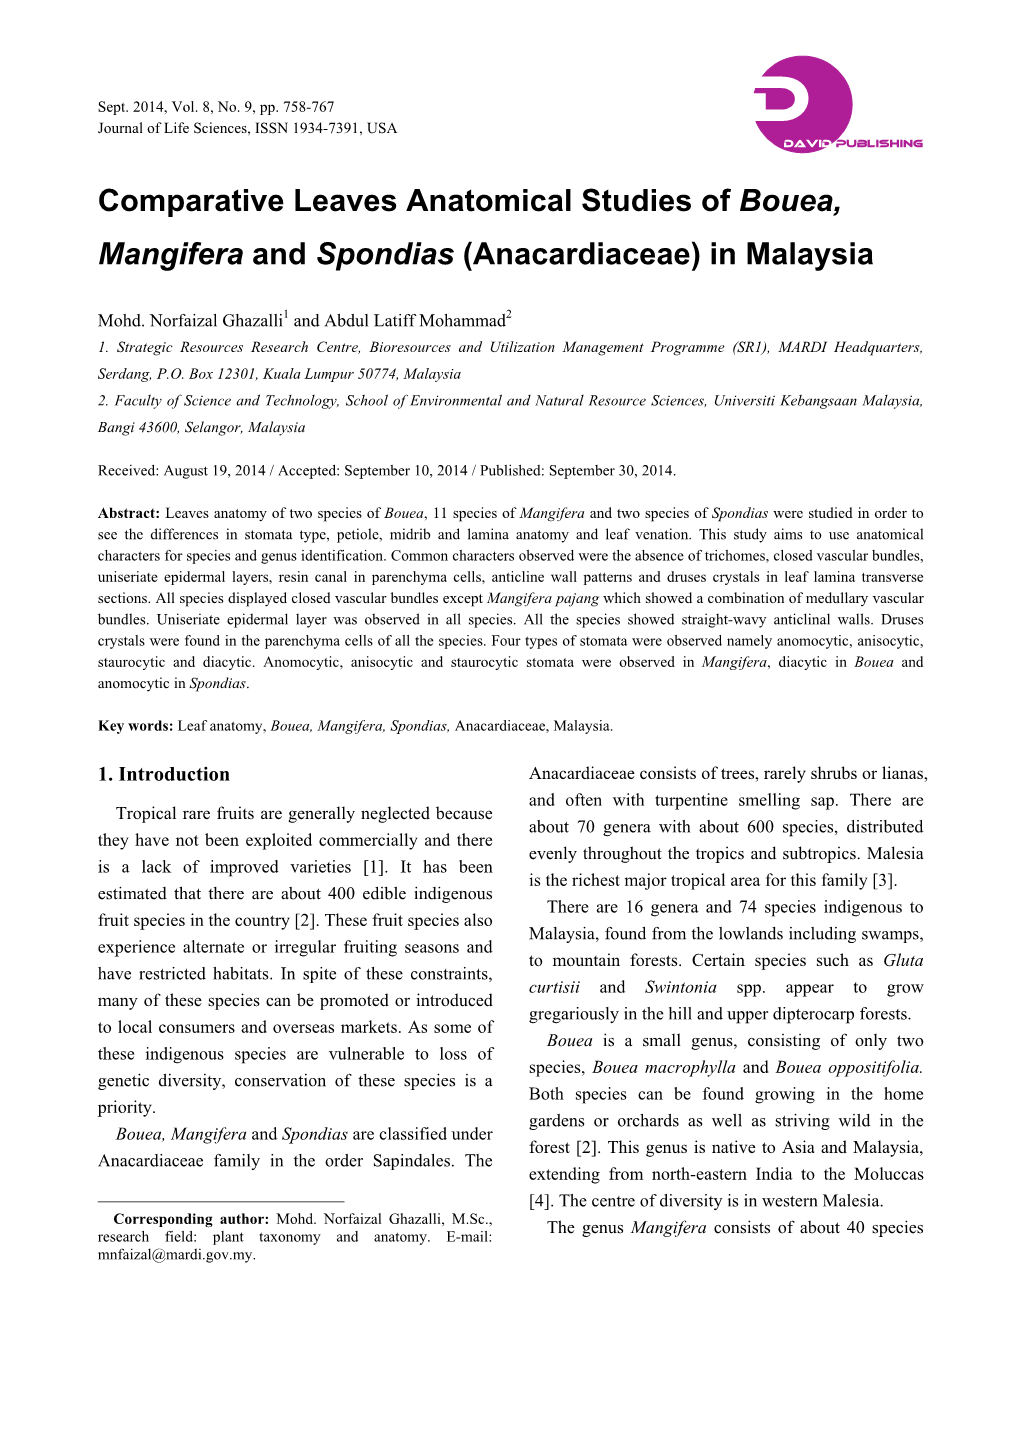 Comparative Leaves Anatomical Studies of Bouea, Mangifera and Spondias (Anacardiaceae) in Malaysia